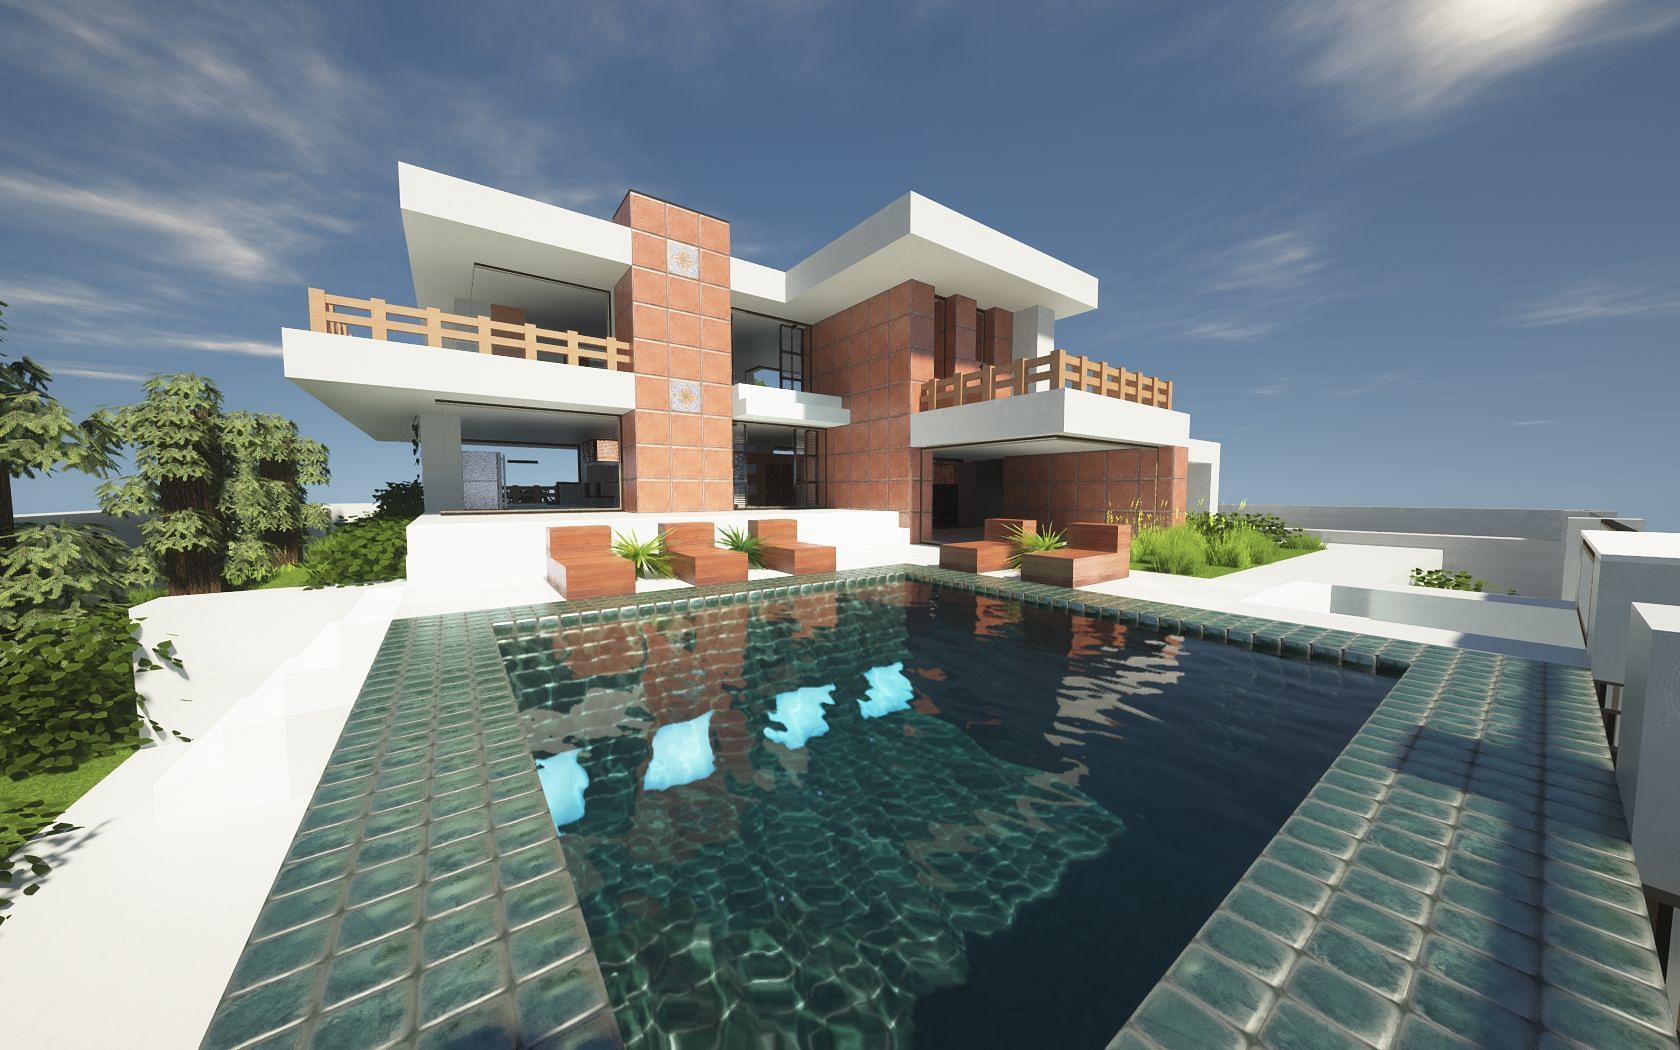 Swimming pool in modern house (Image via Reddit)